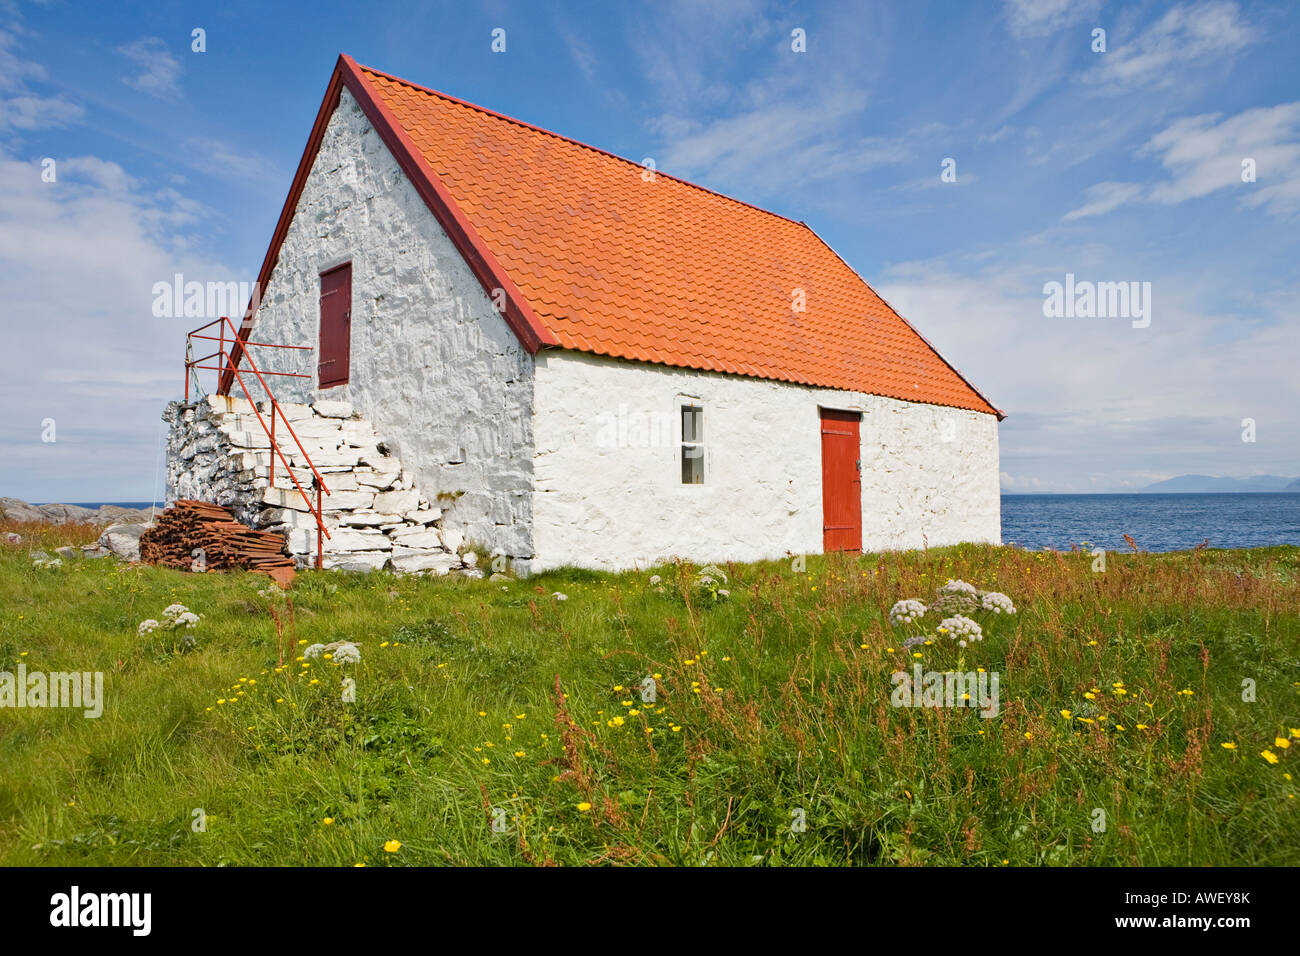 Farm building, Runde Island, Norway, Scandinavia, Europe Stock Photo